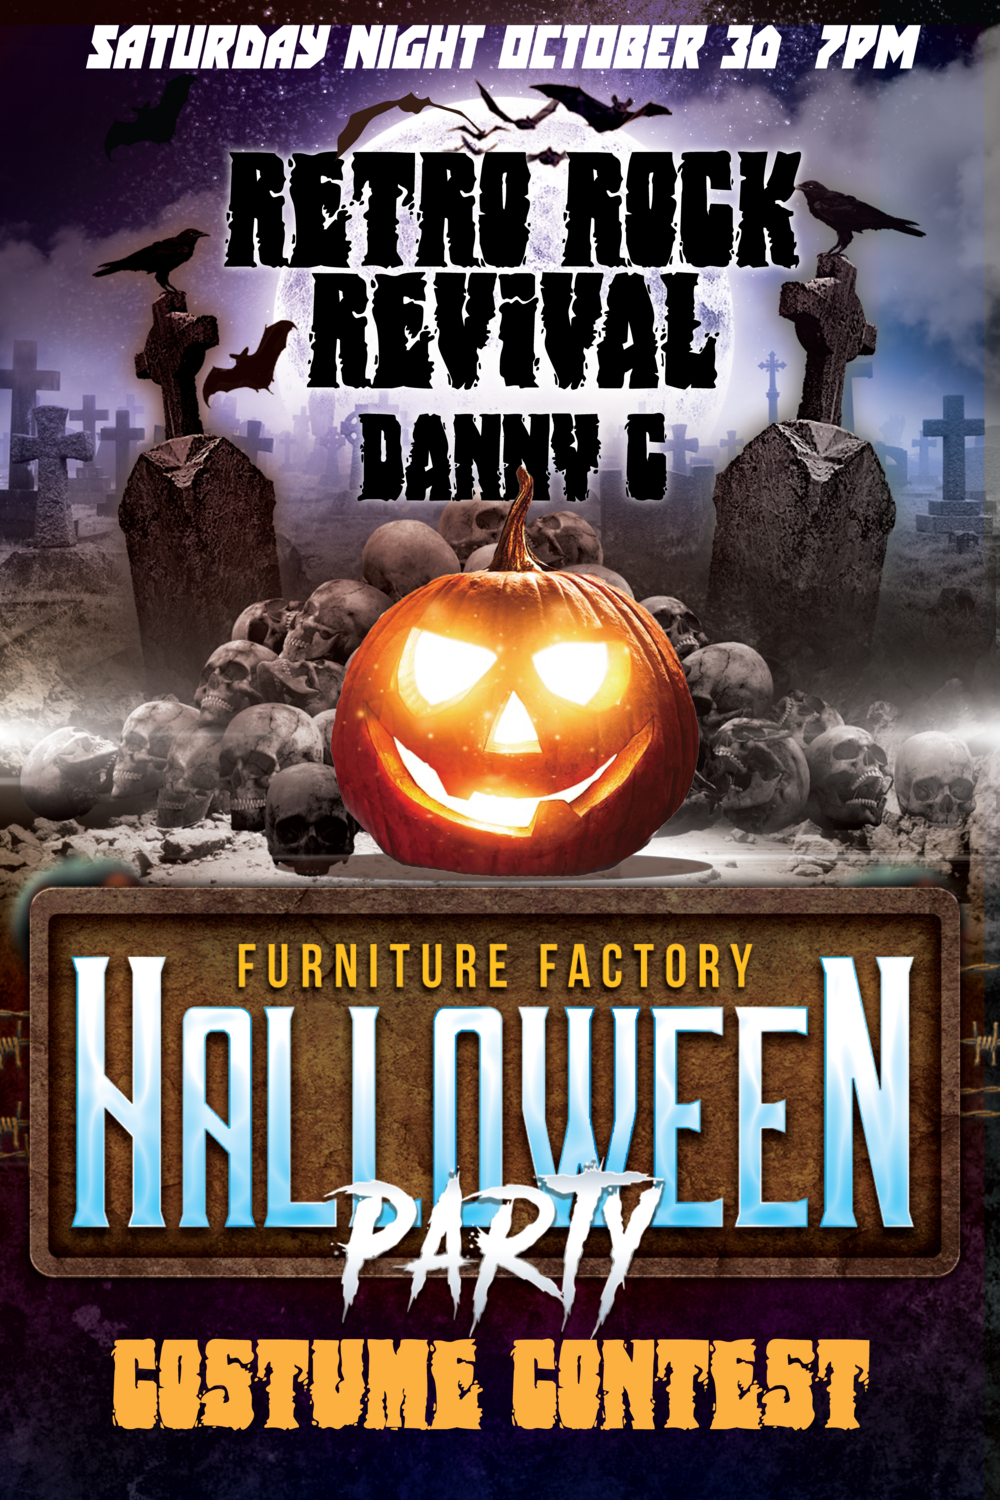 HALLOWEEN PARTY w/Retro Rock Revival and DJ Danny C - GA Ticket OCT 30th